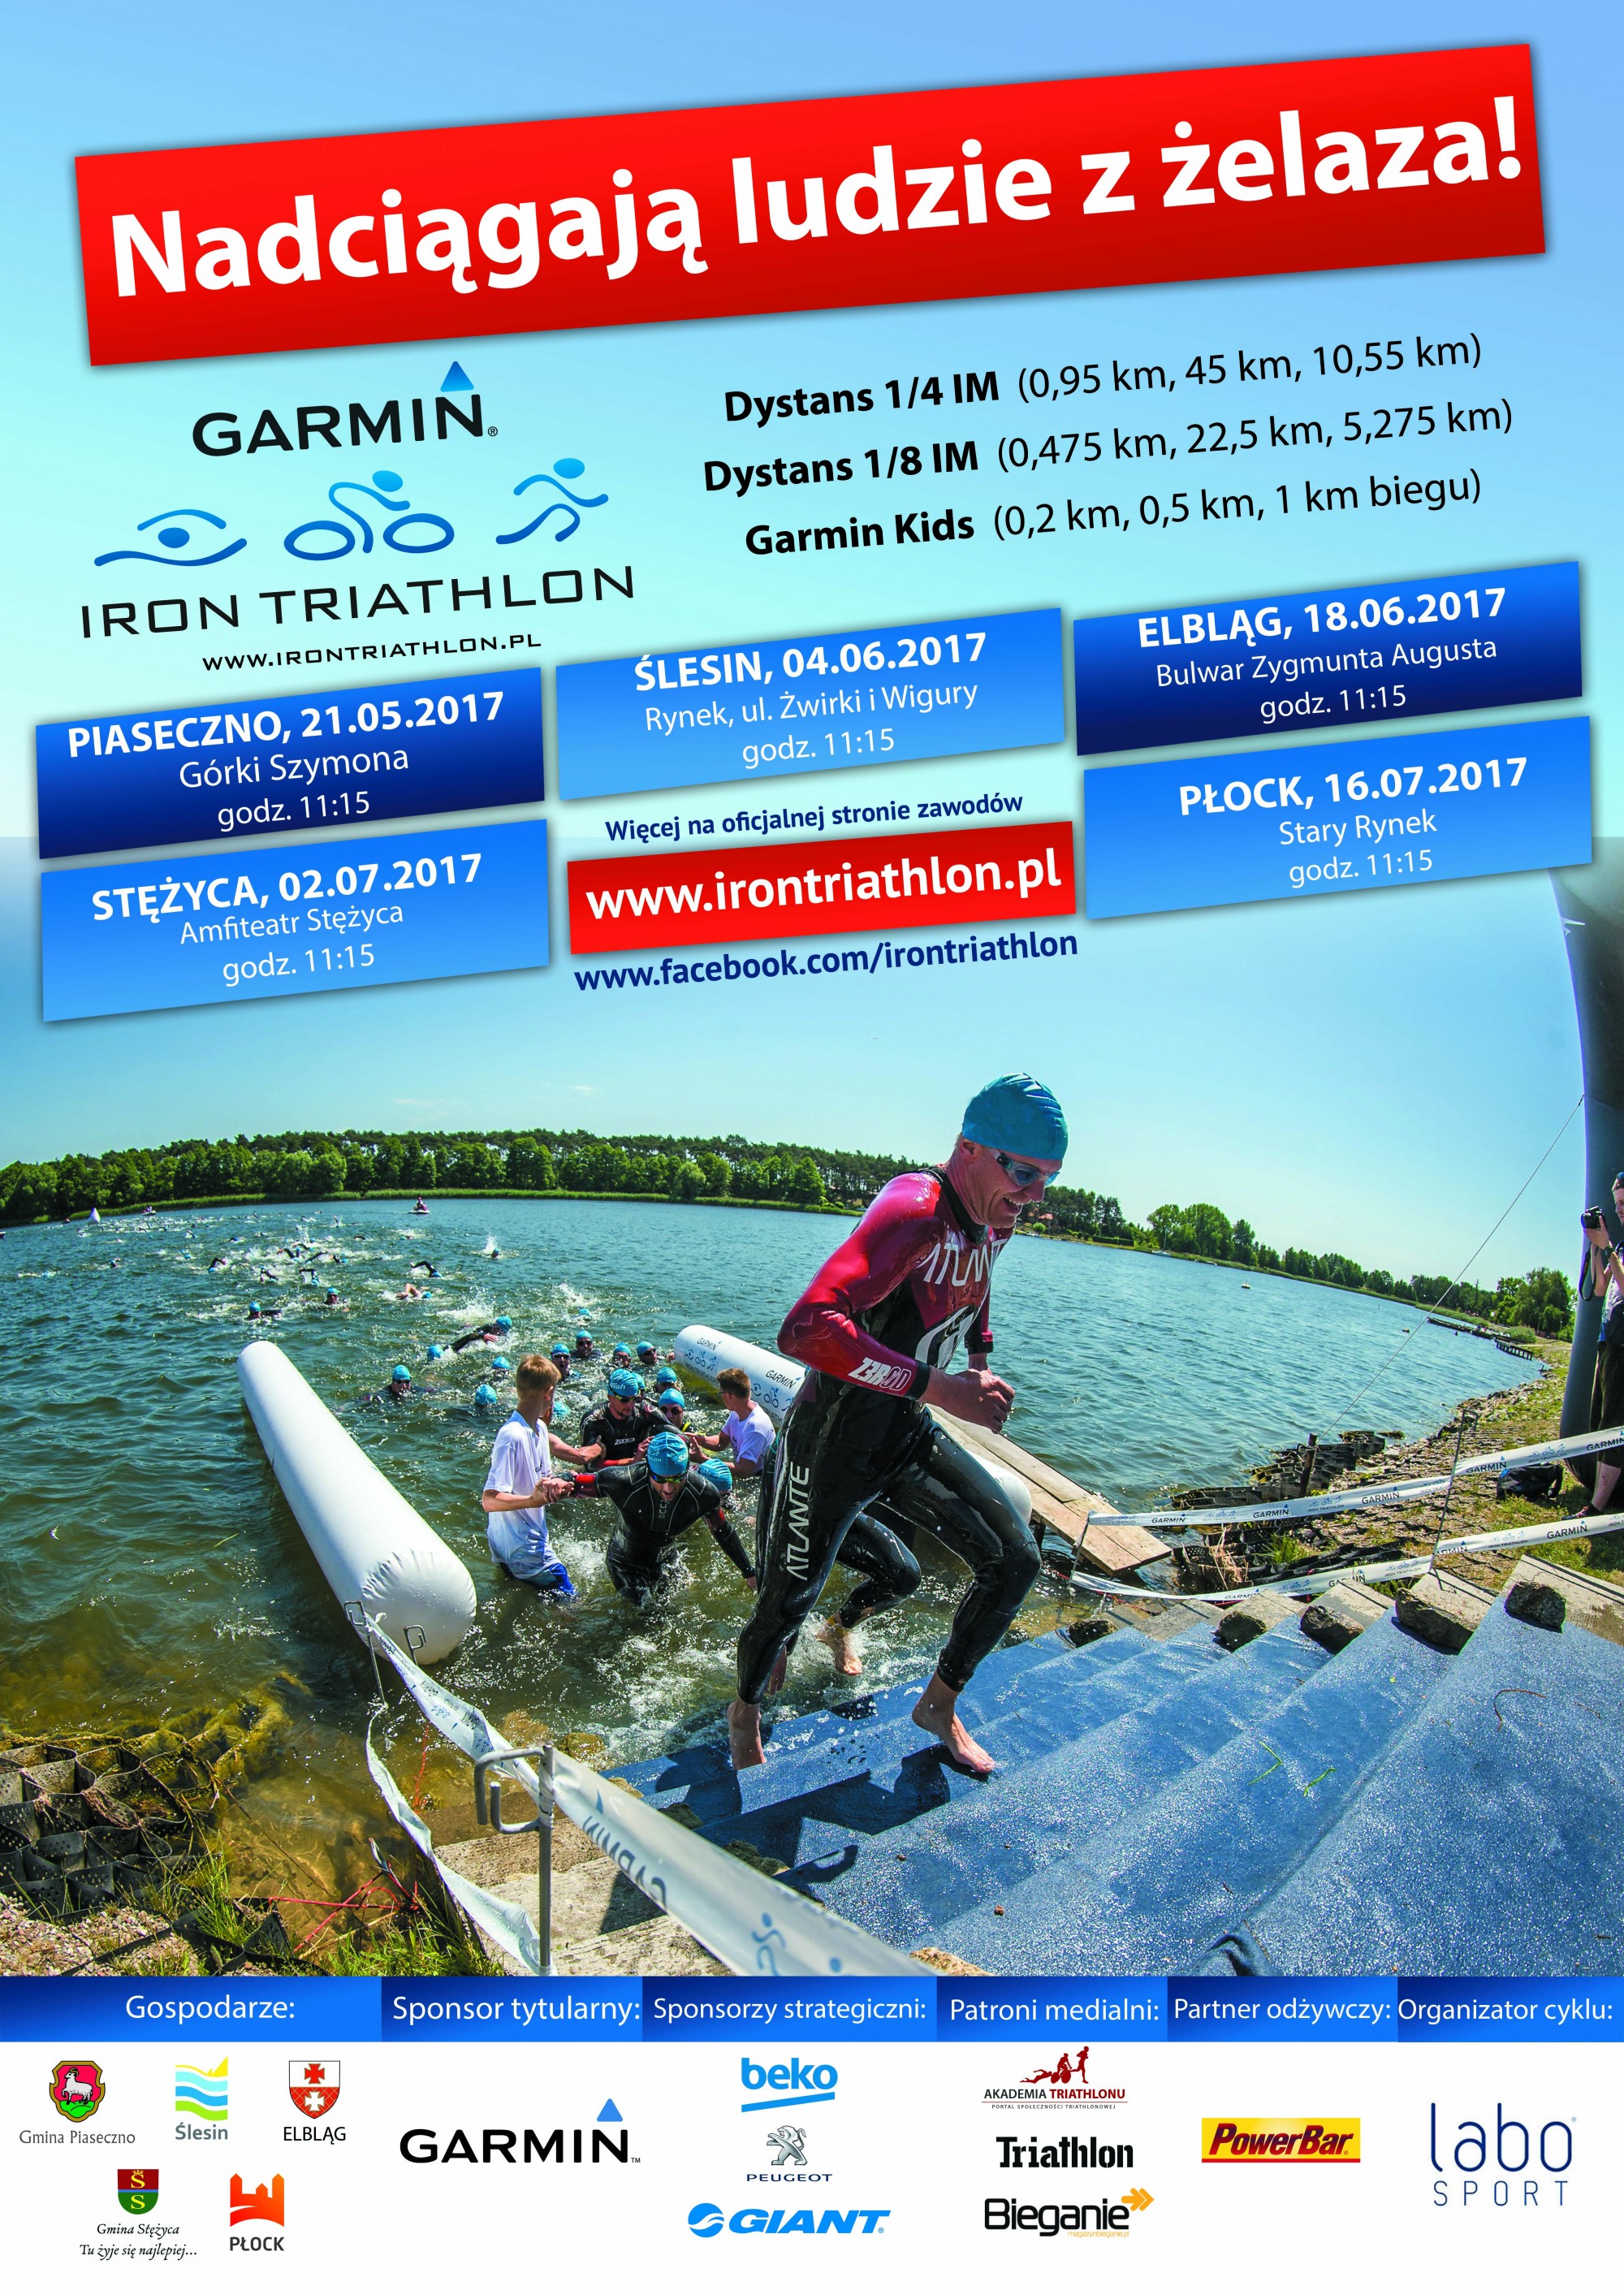 Garmin Iron Triathlon Stężyca - 02.07.2017